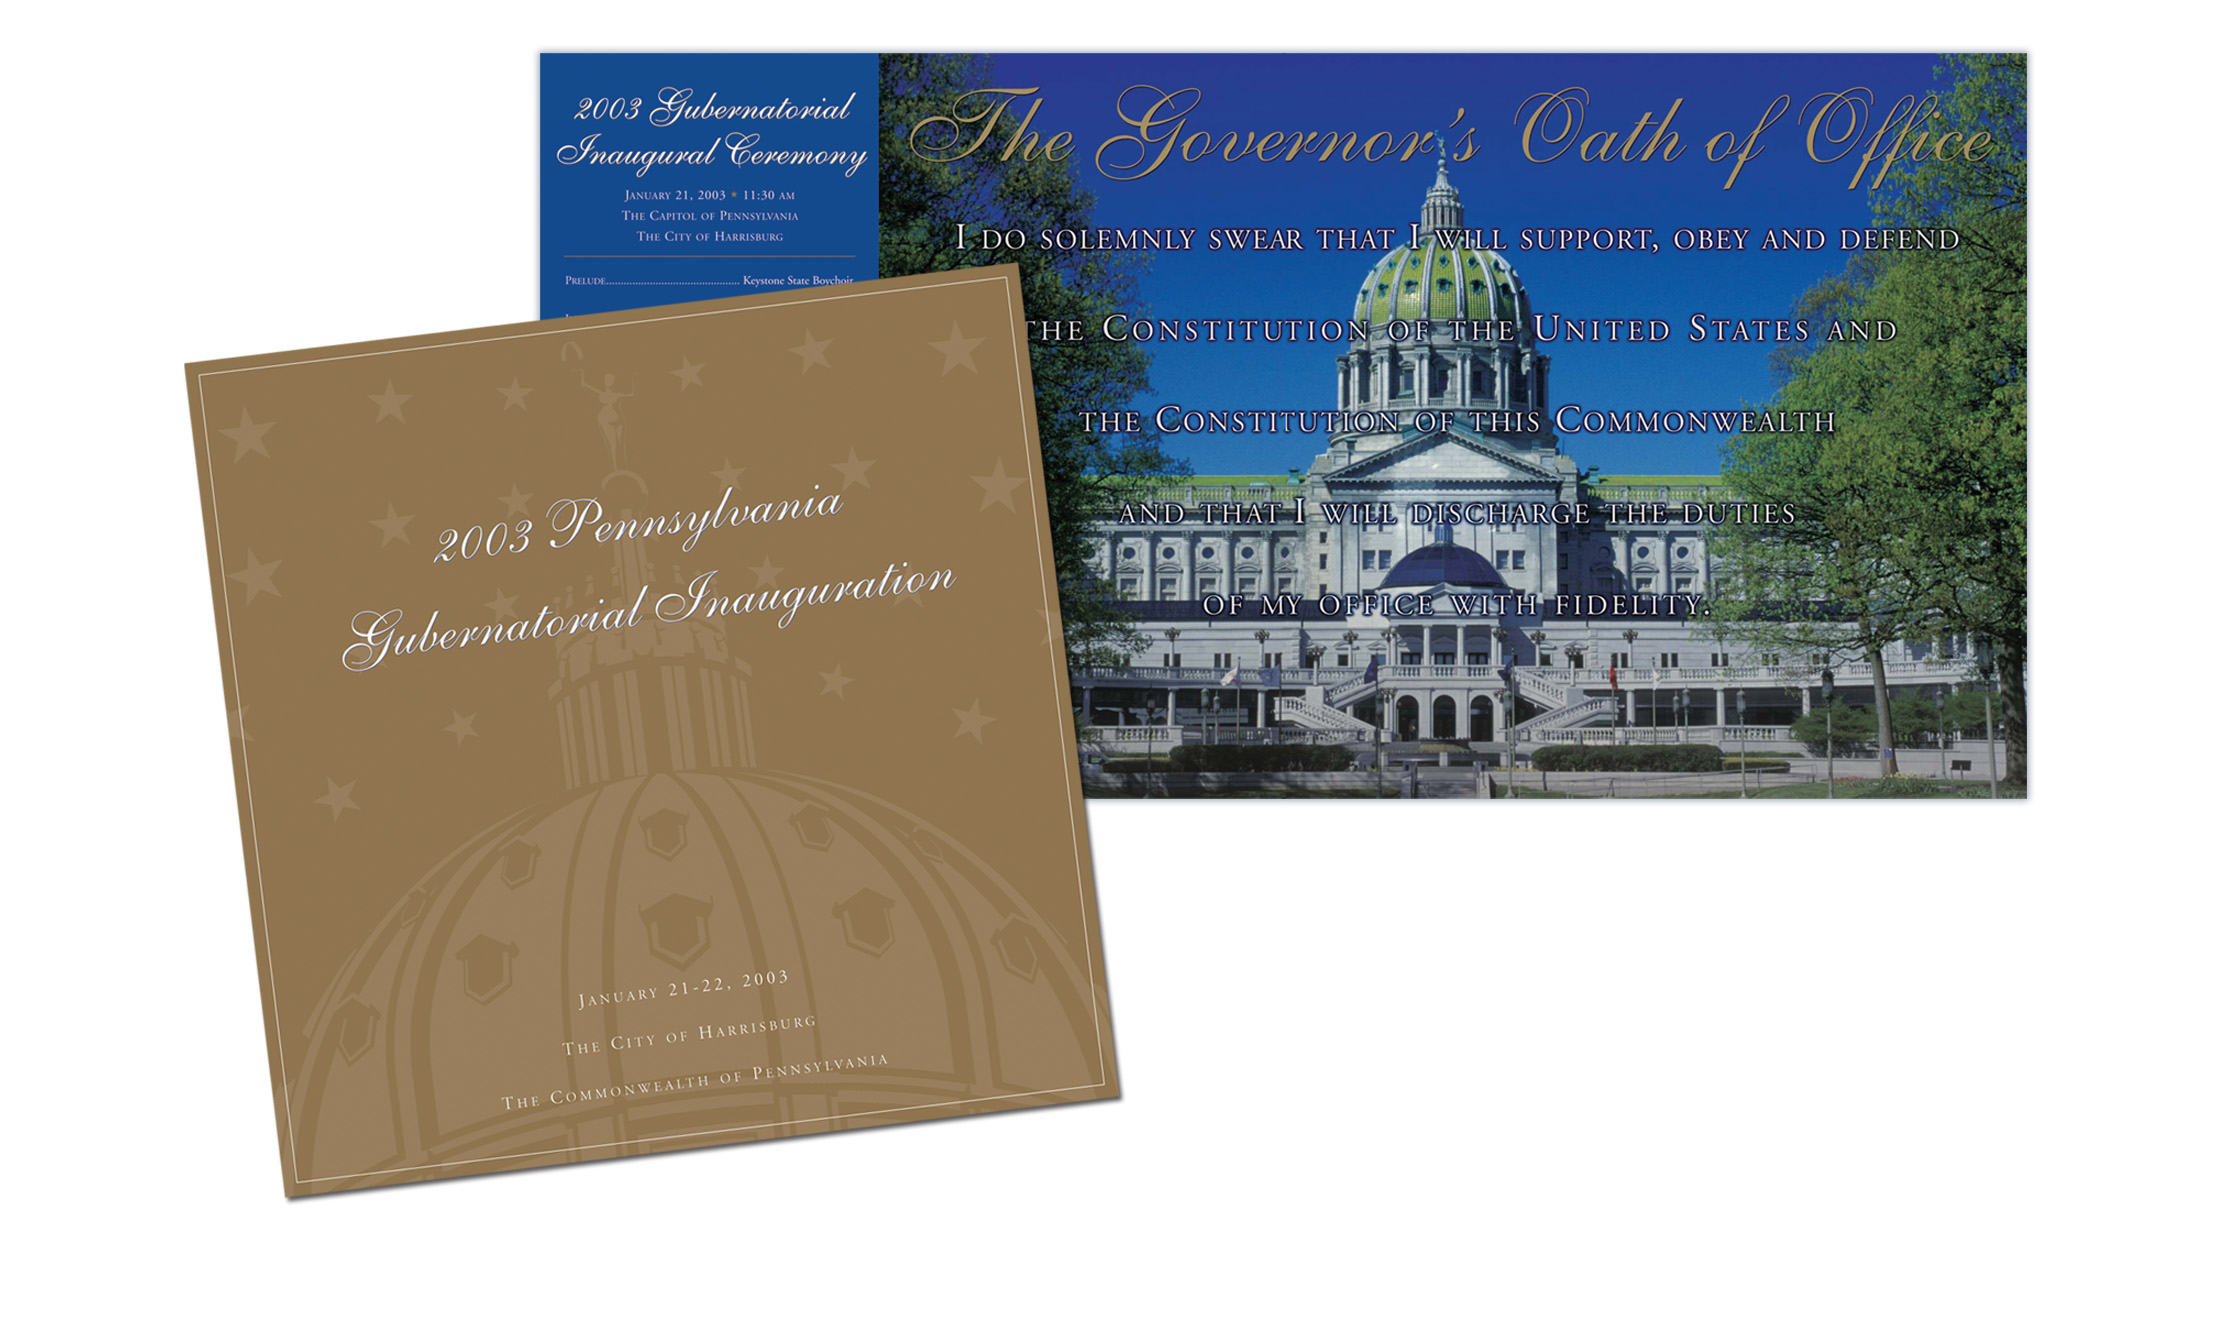 2003 PA Gubernatorial Inauguration Program